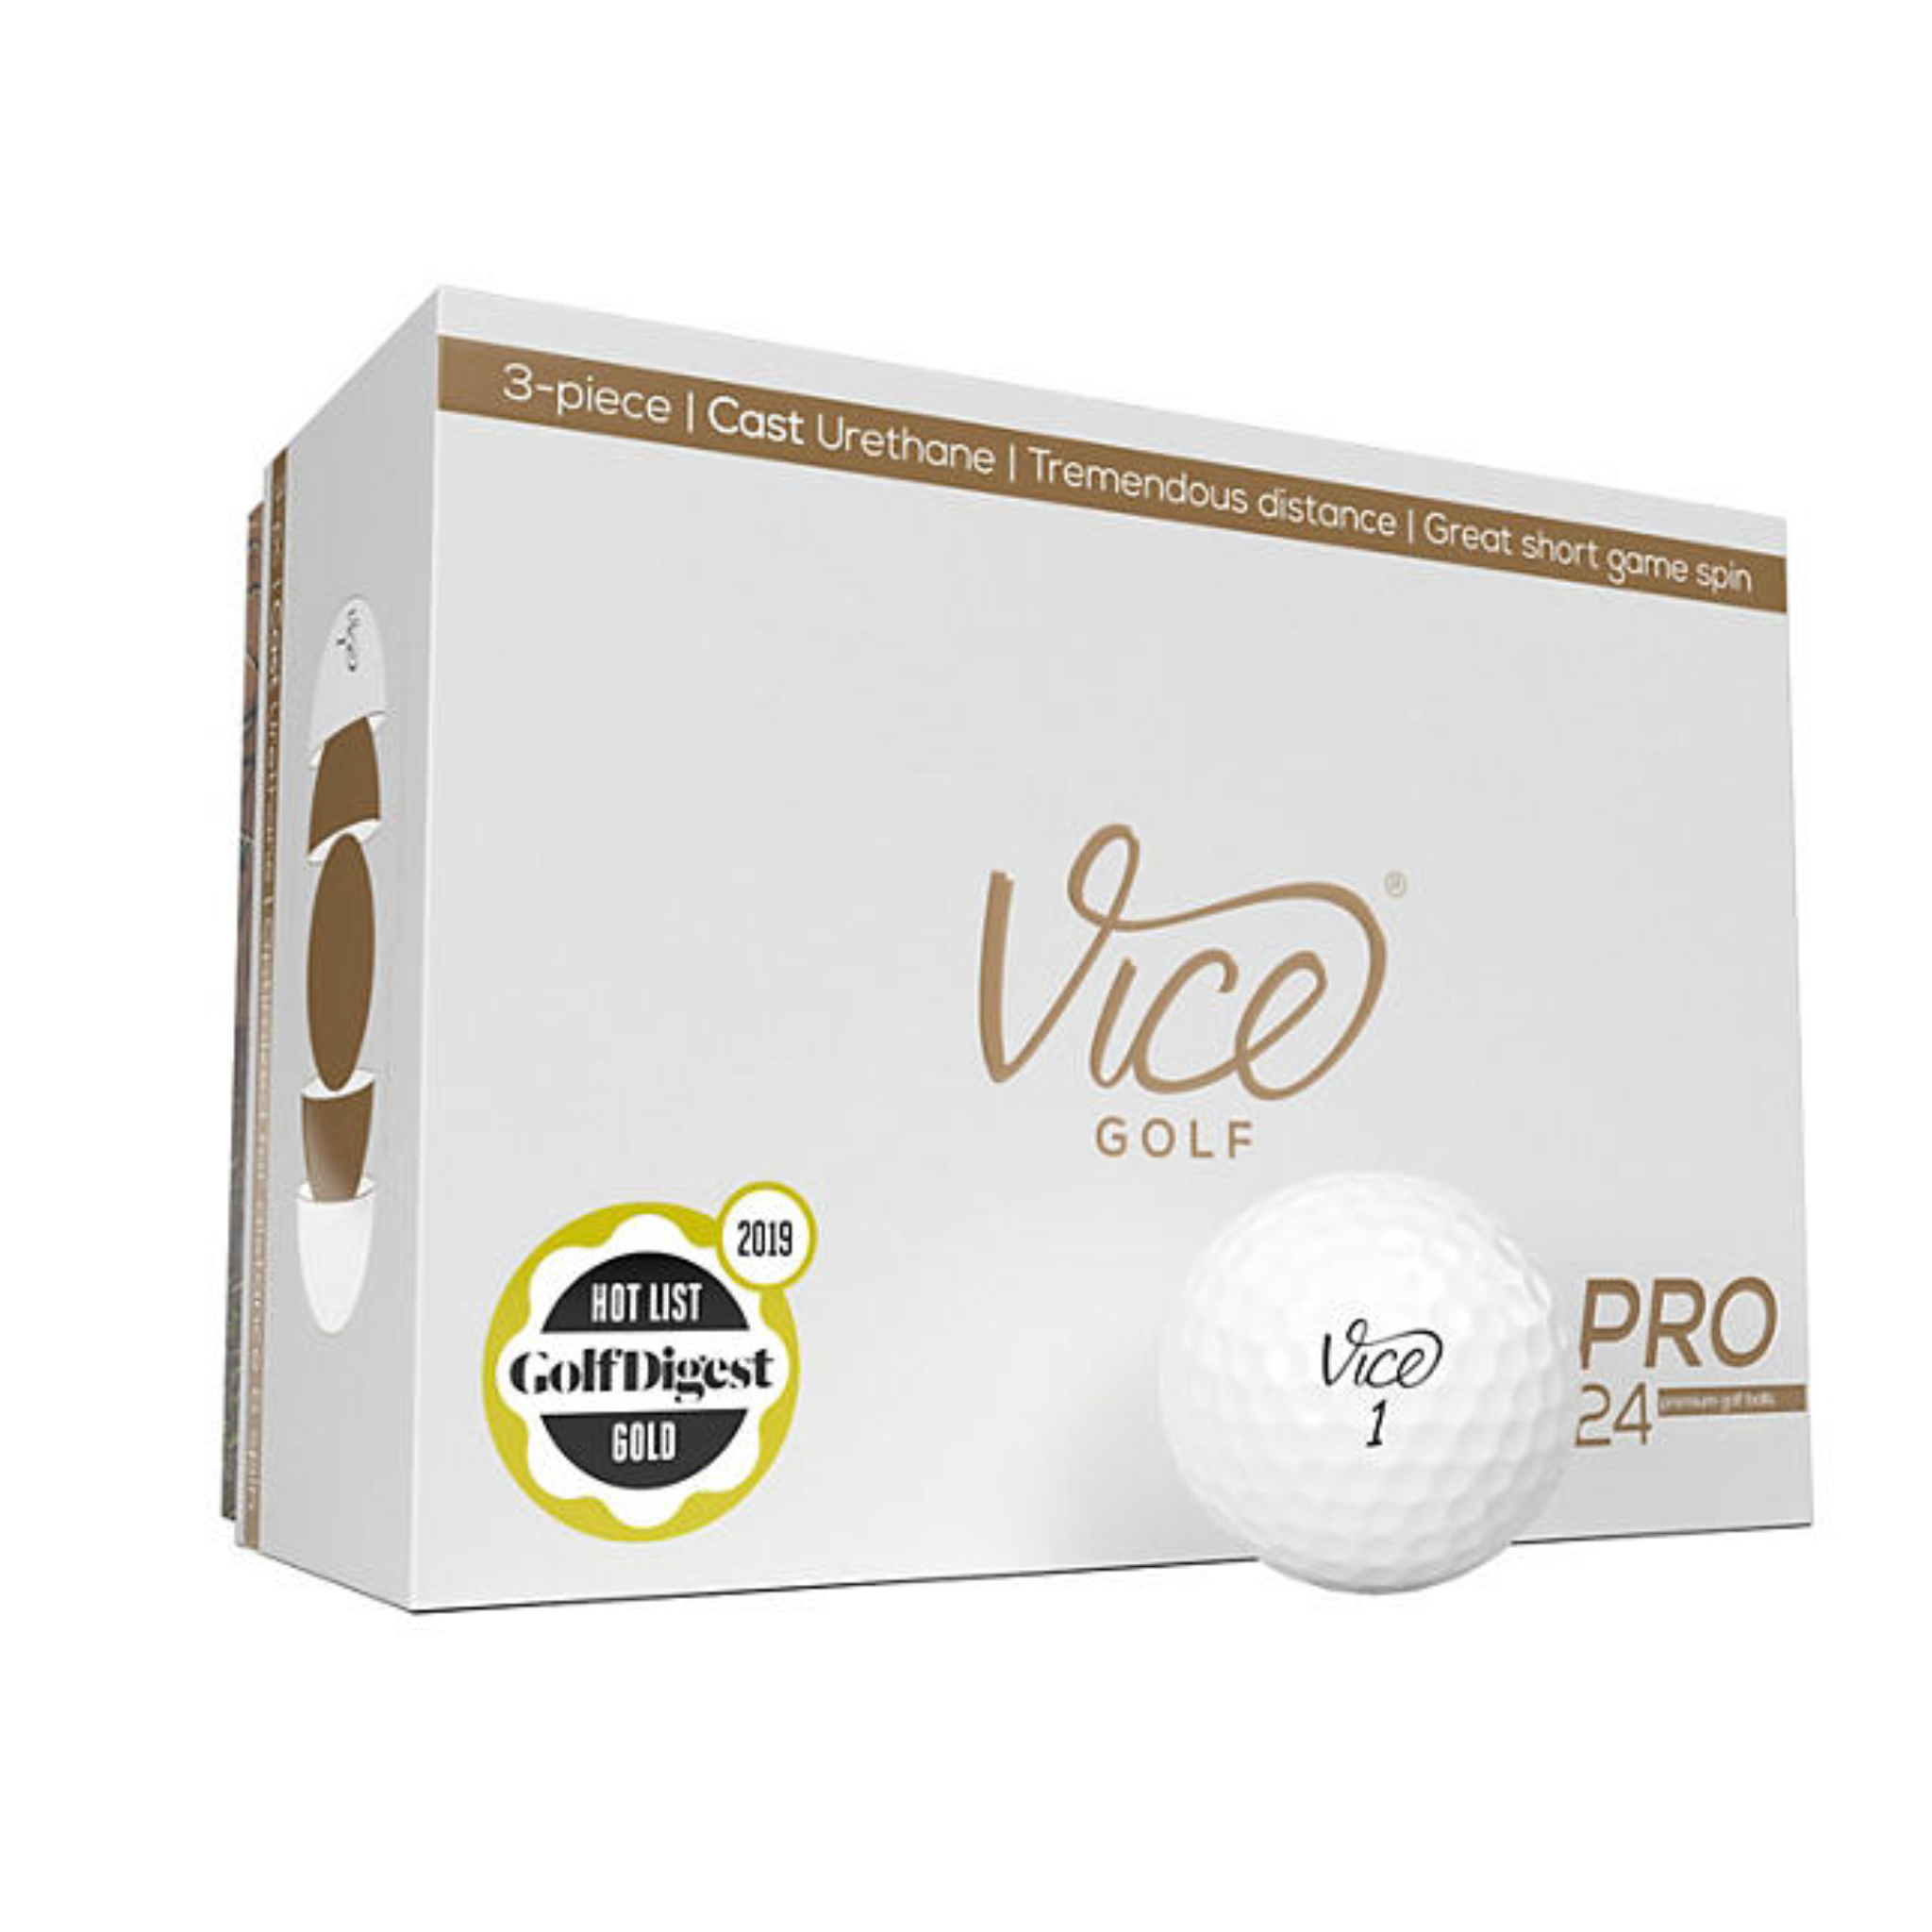 Vice Pro Golf Balls, 2 Dozen